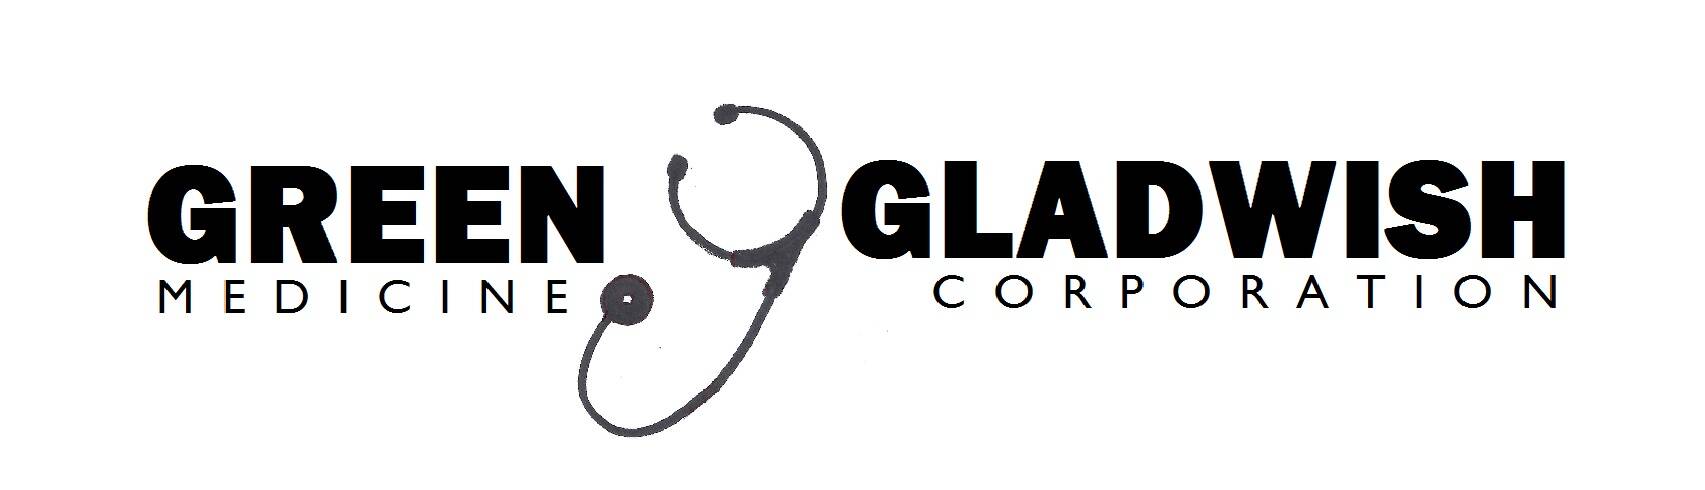 Green Gladwin Medicine Corporation